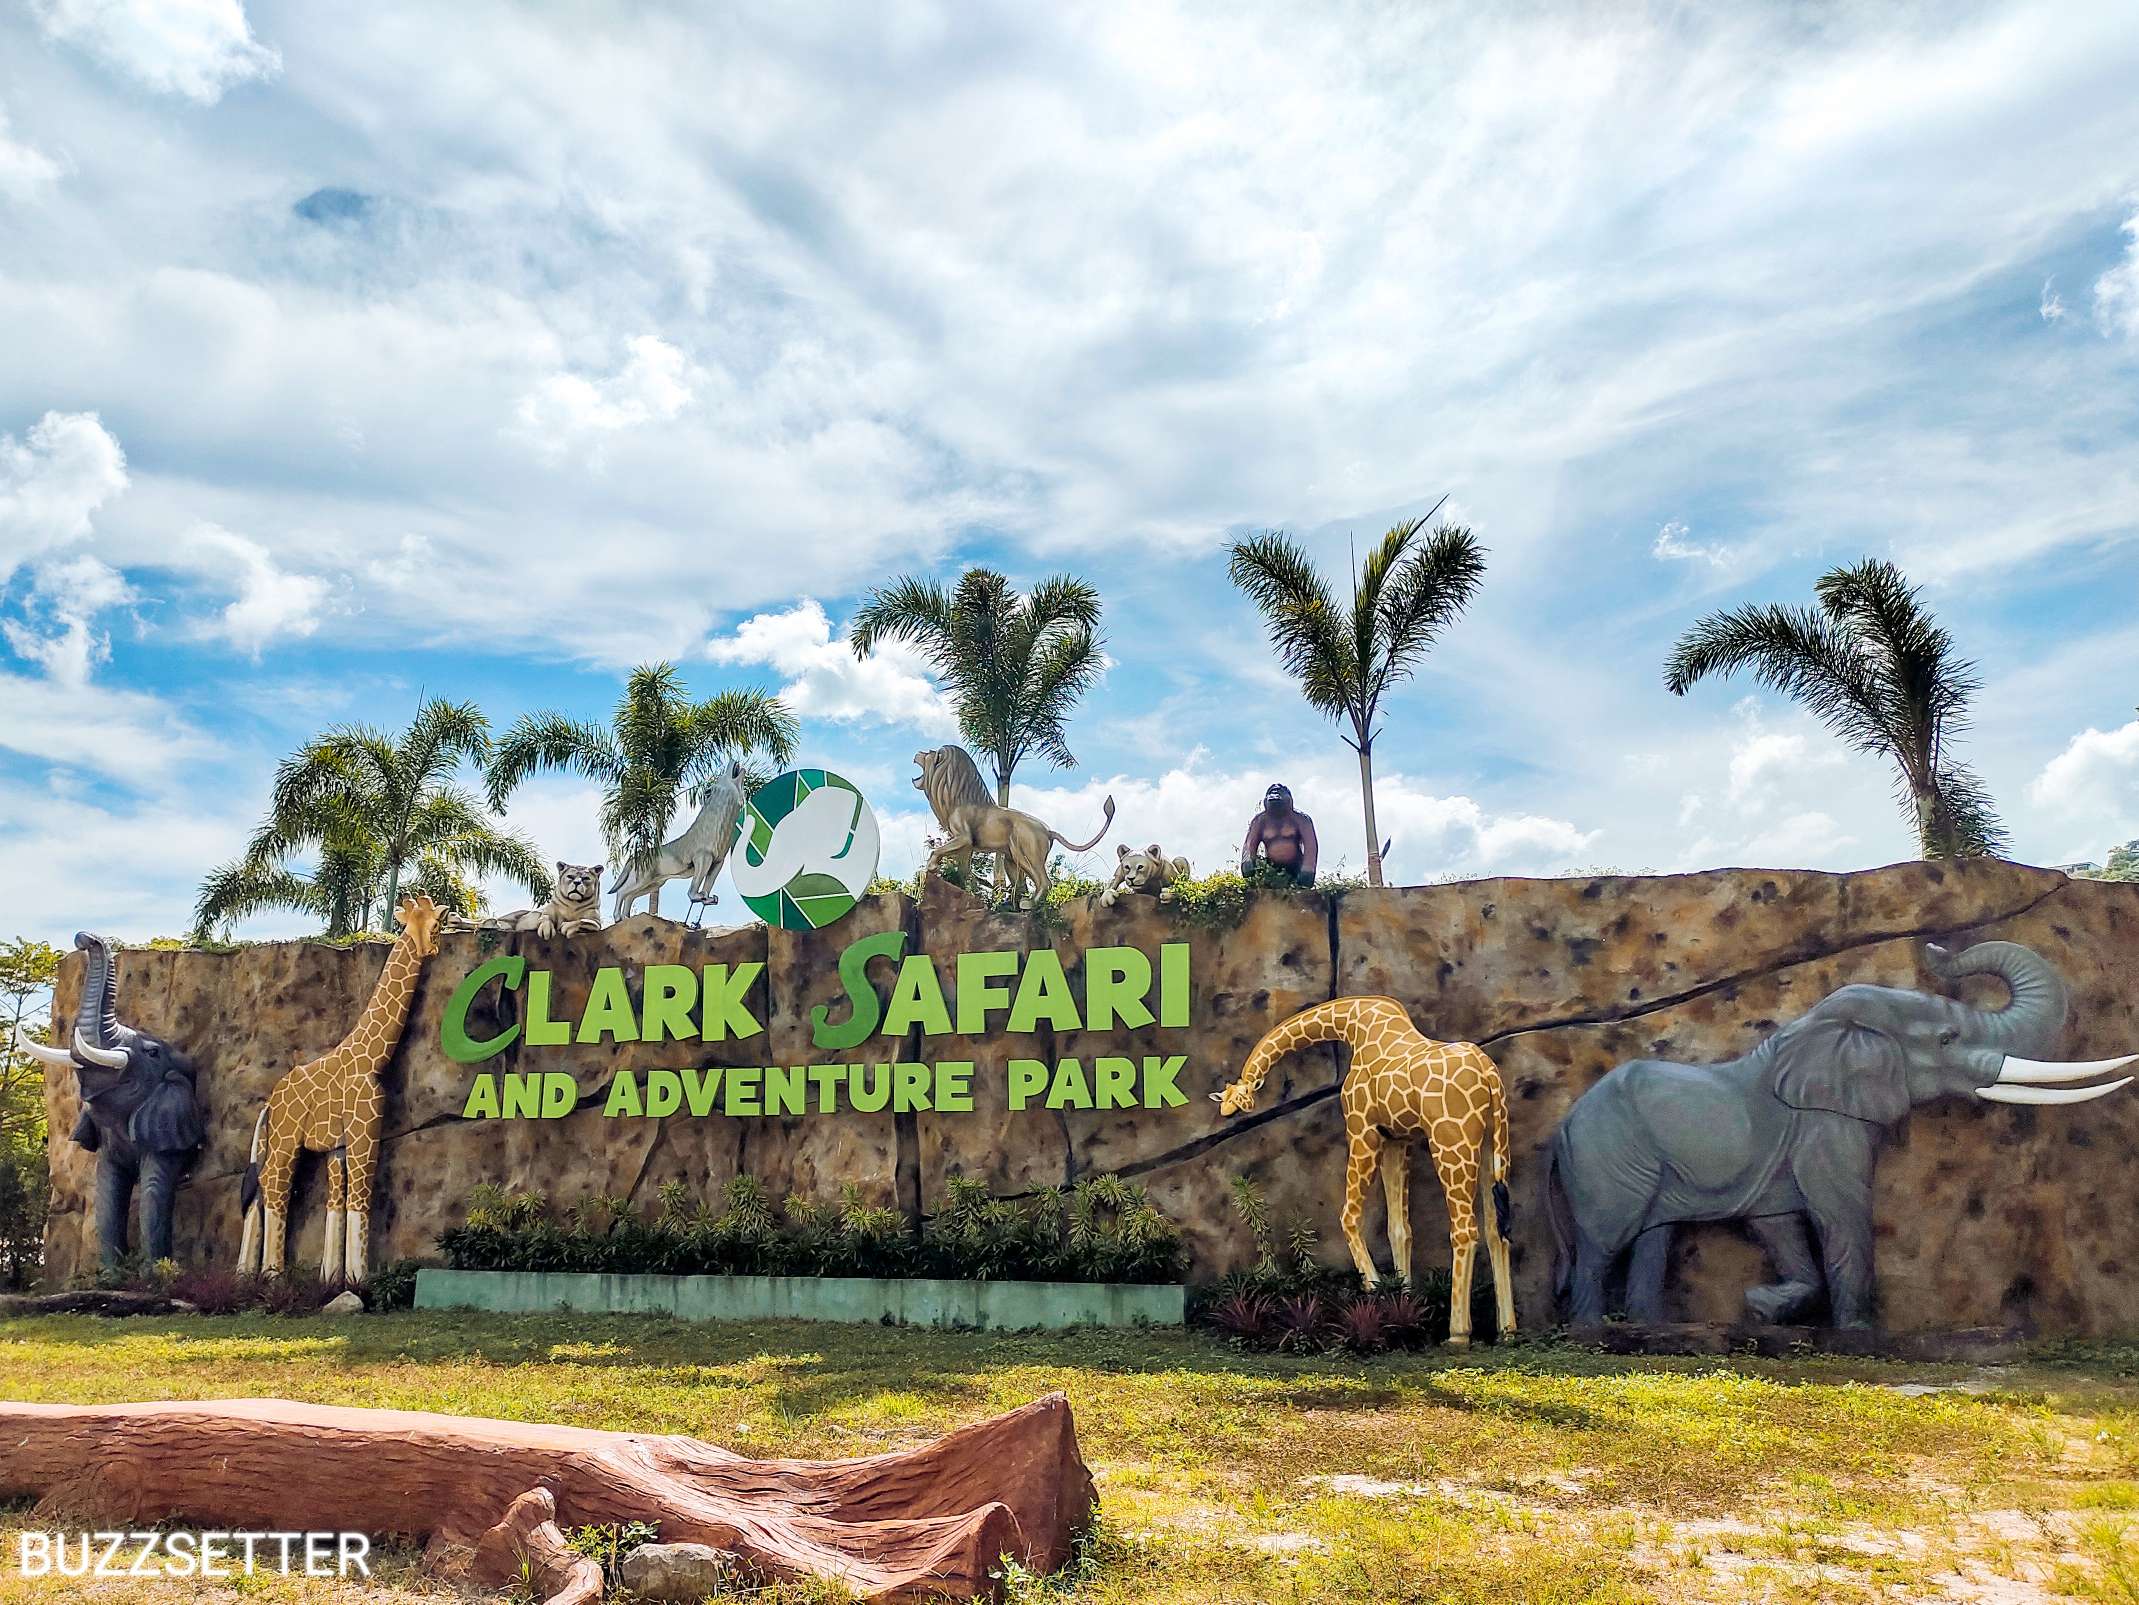 clark safari rates